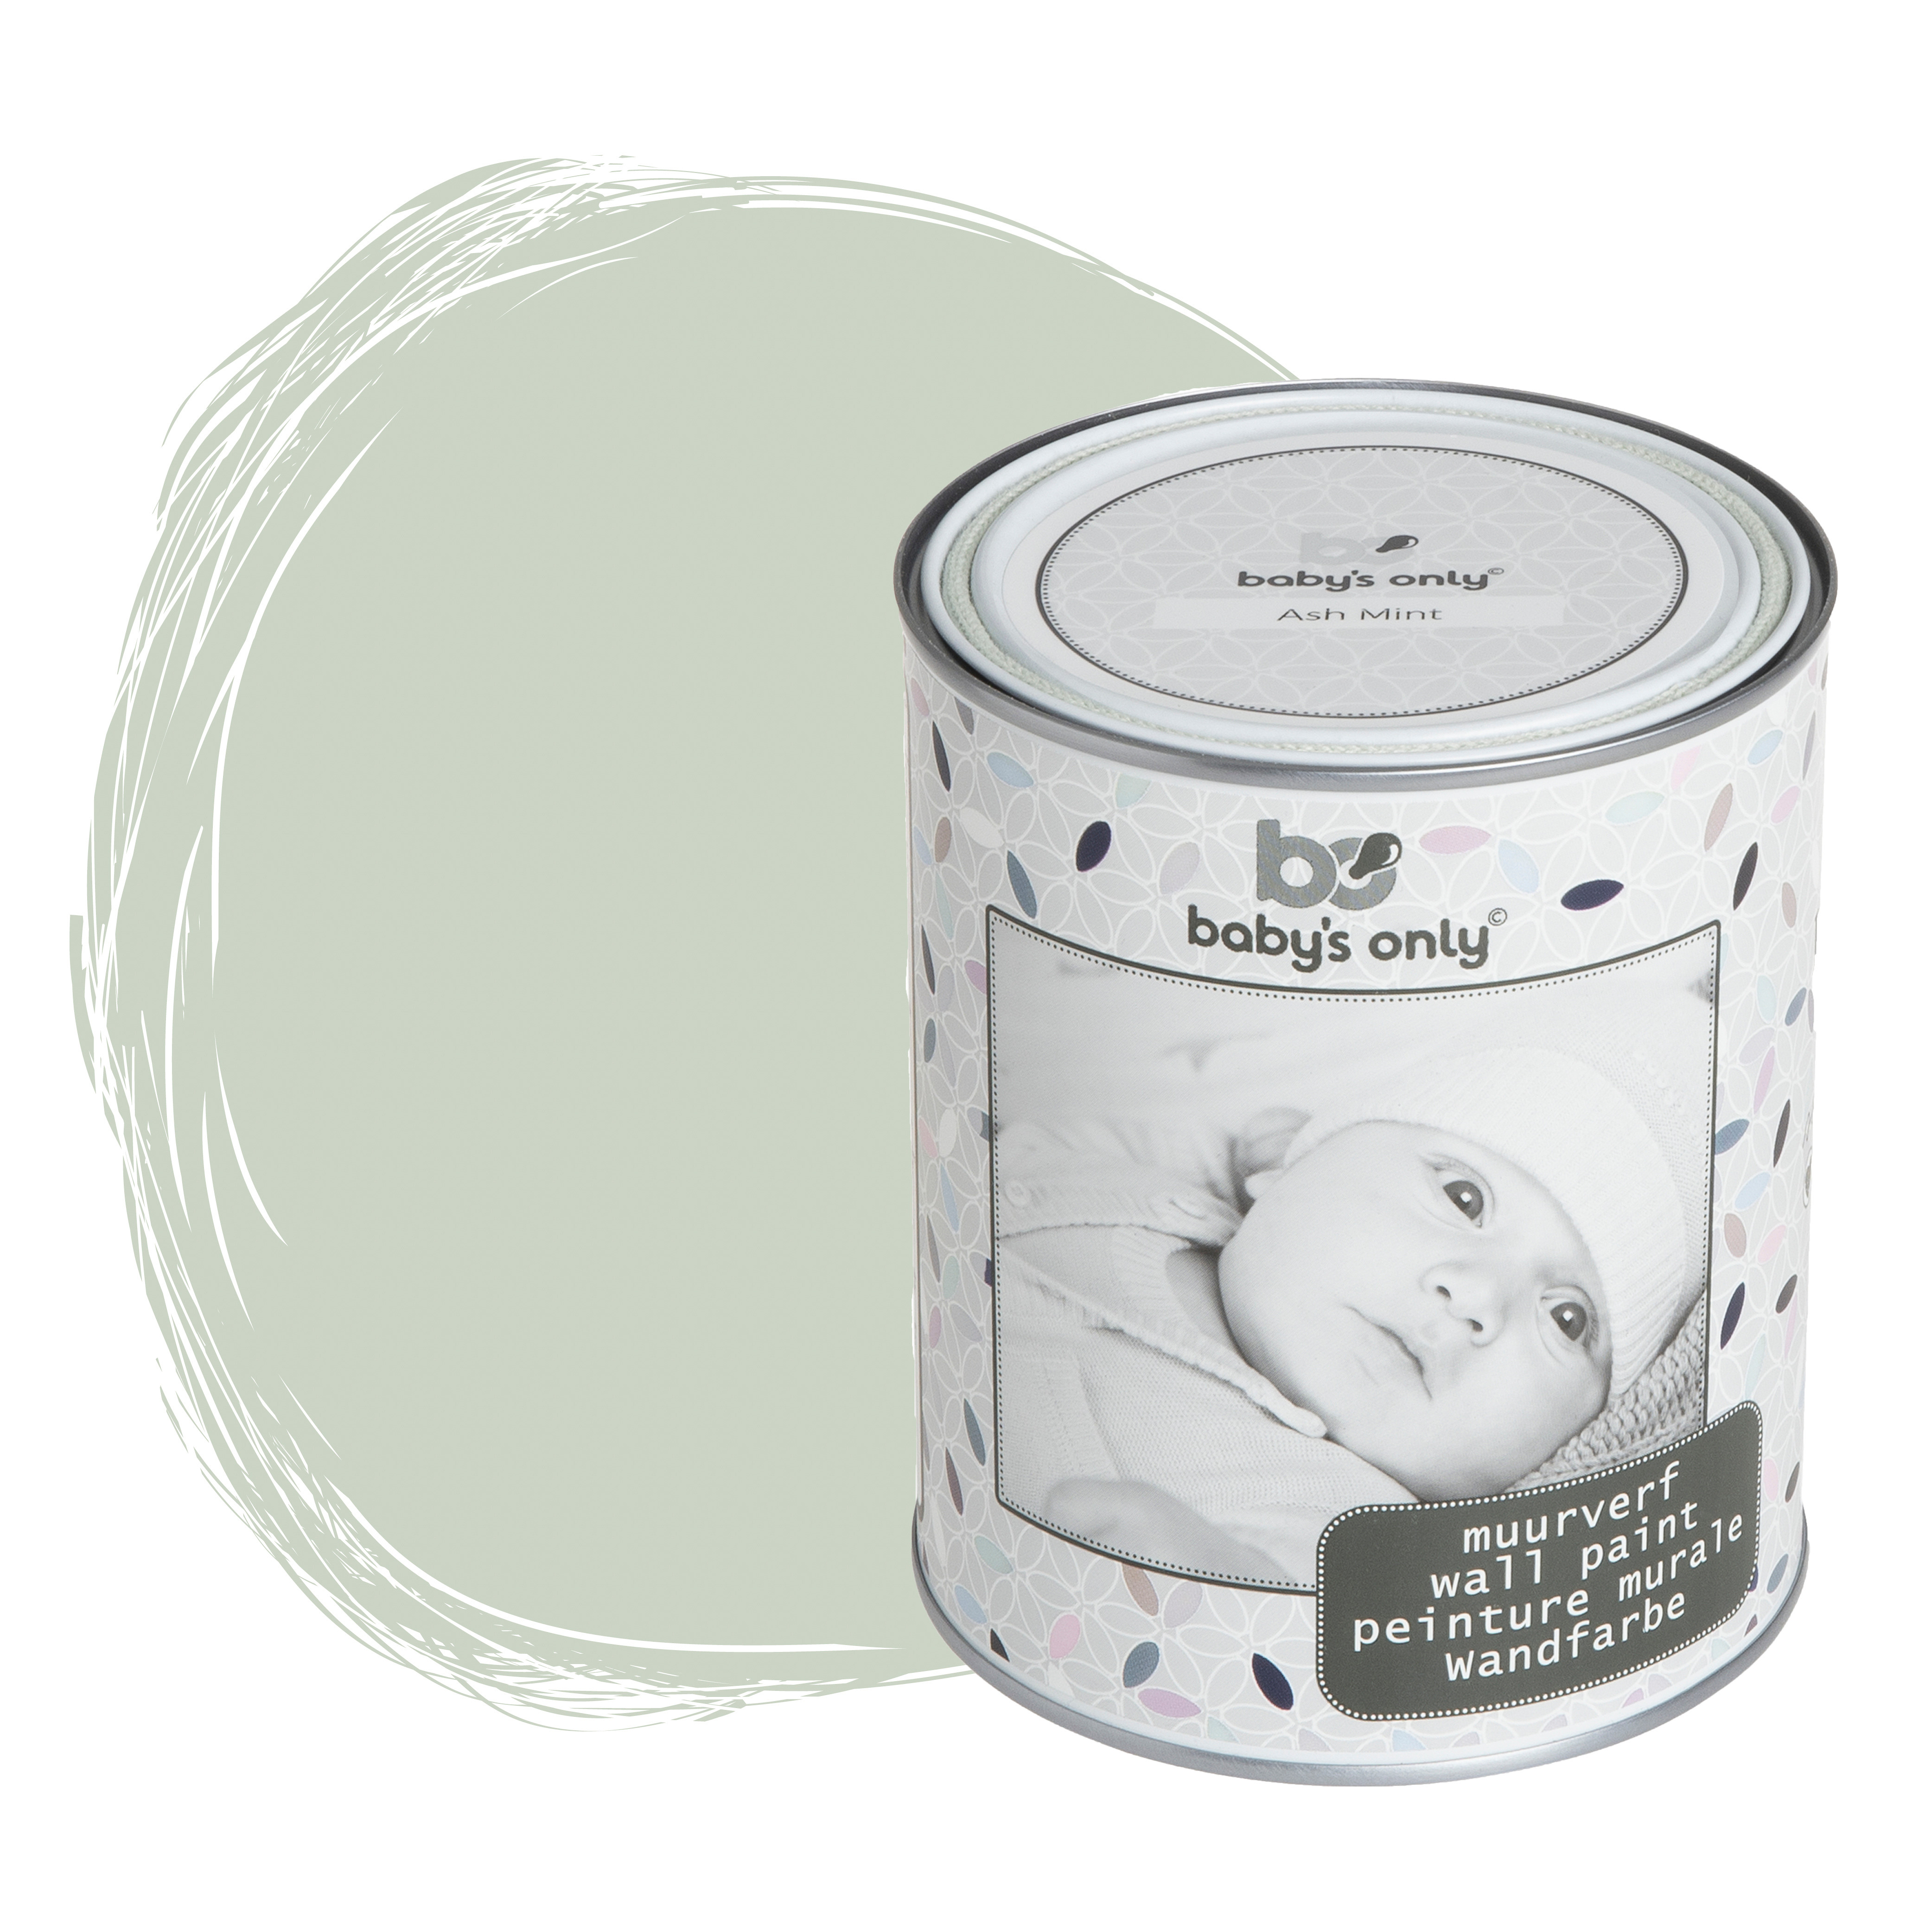 Wall paint ash mint - 1 liter